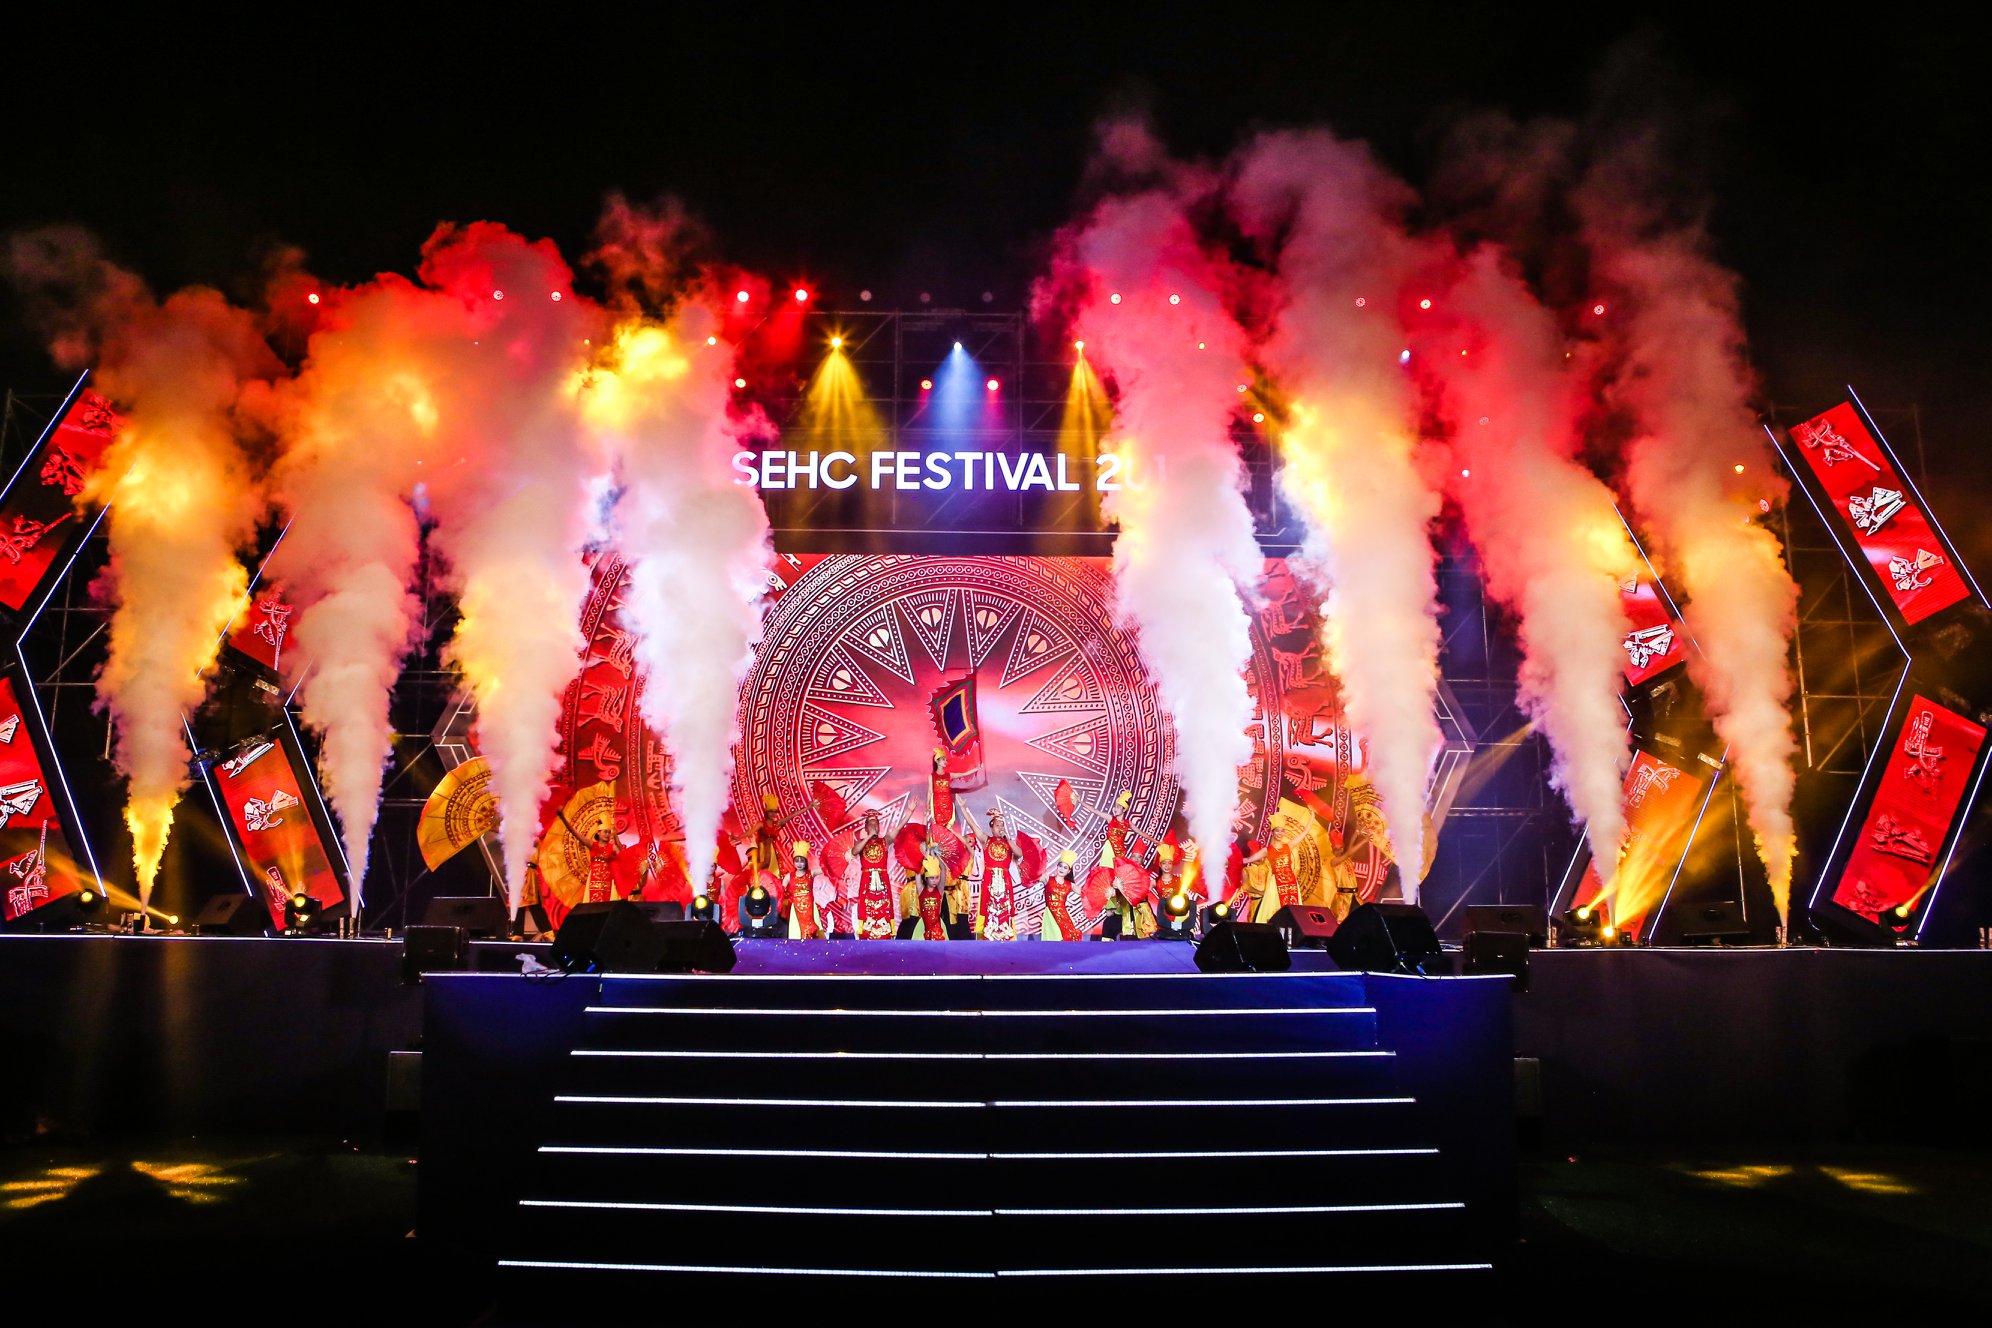 SEHC Festival